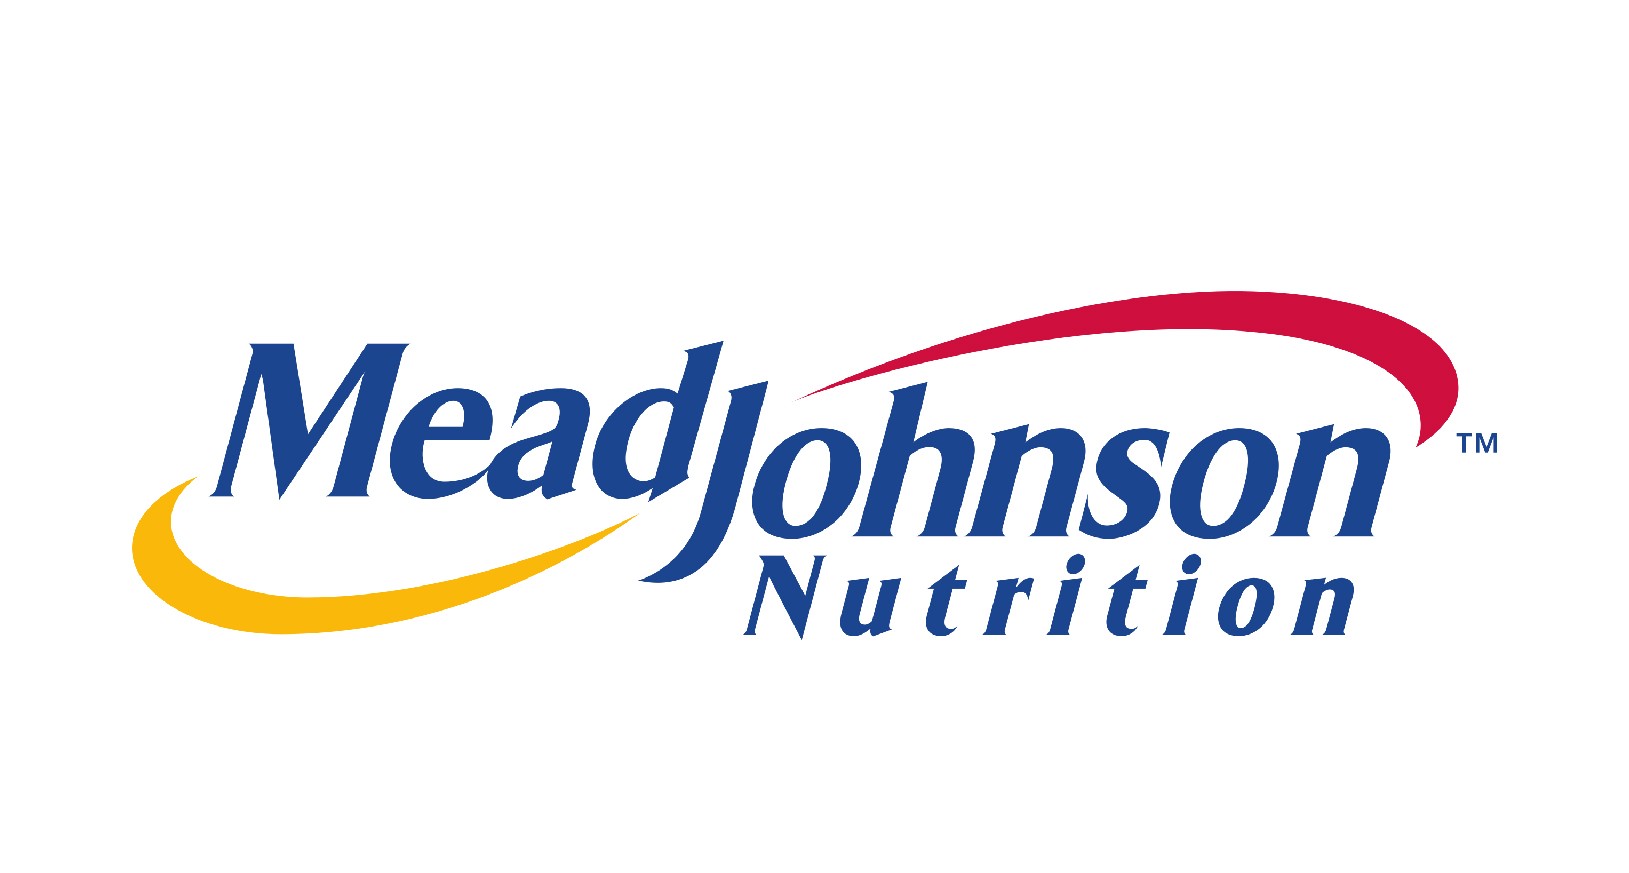 MEAD JOHNSON NUTRITION